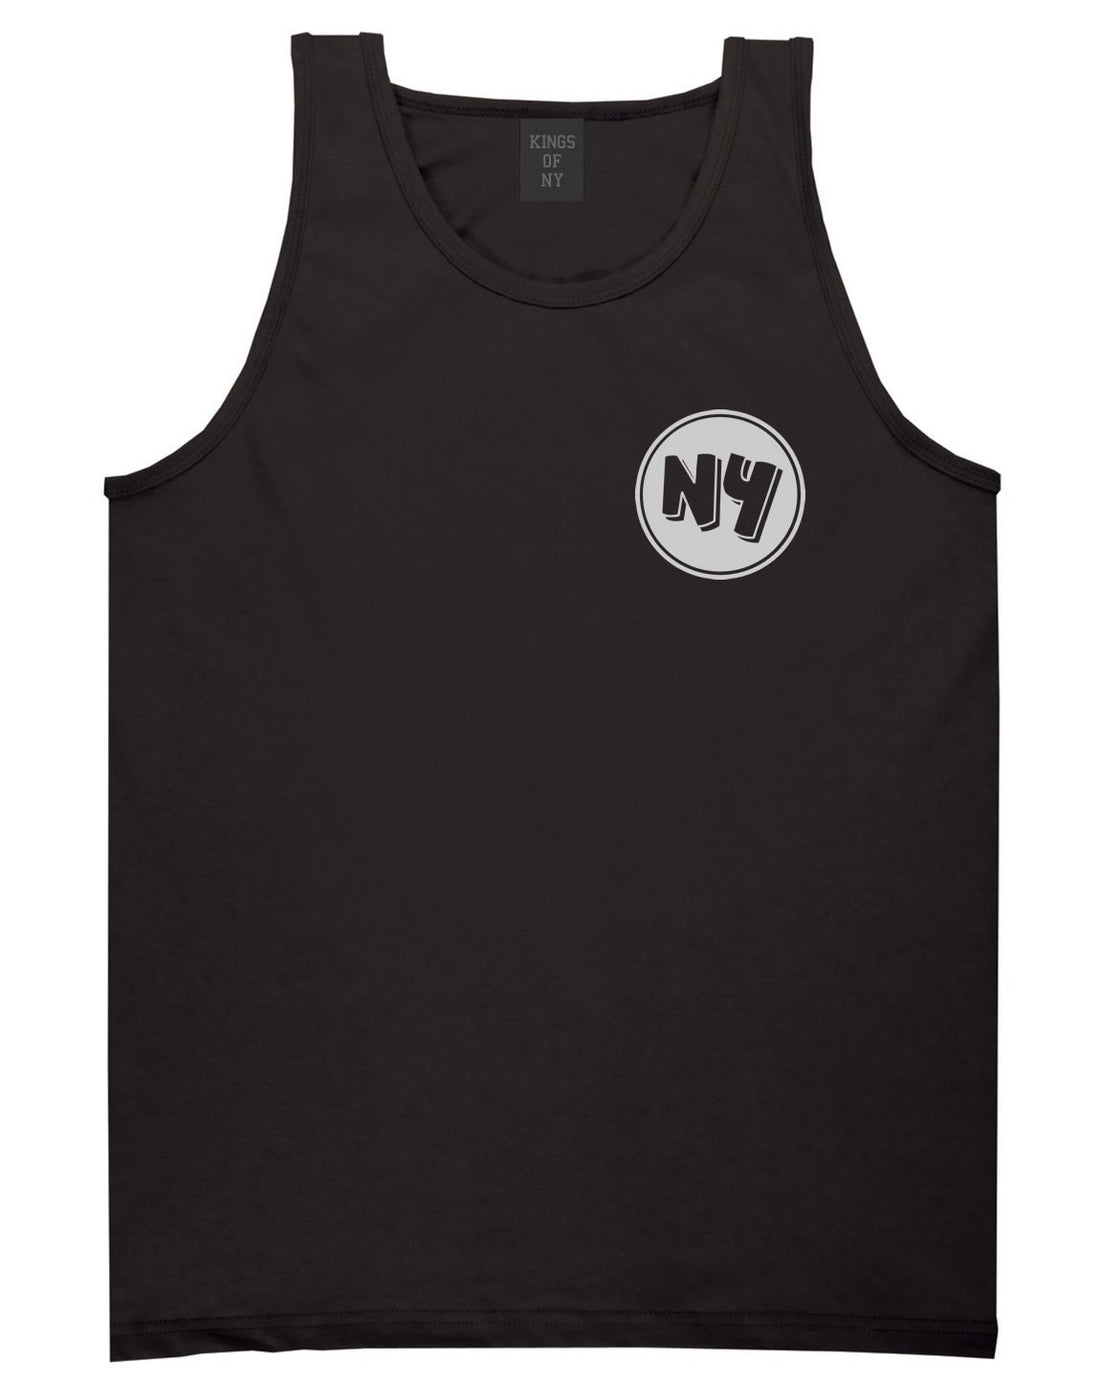 NY Circle Chest Logo Tank Top in Black By Kings Of NY